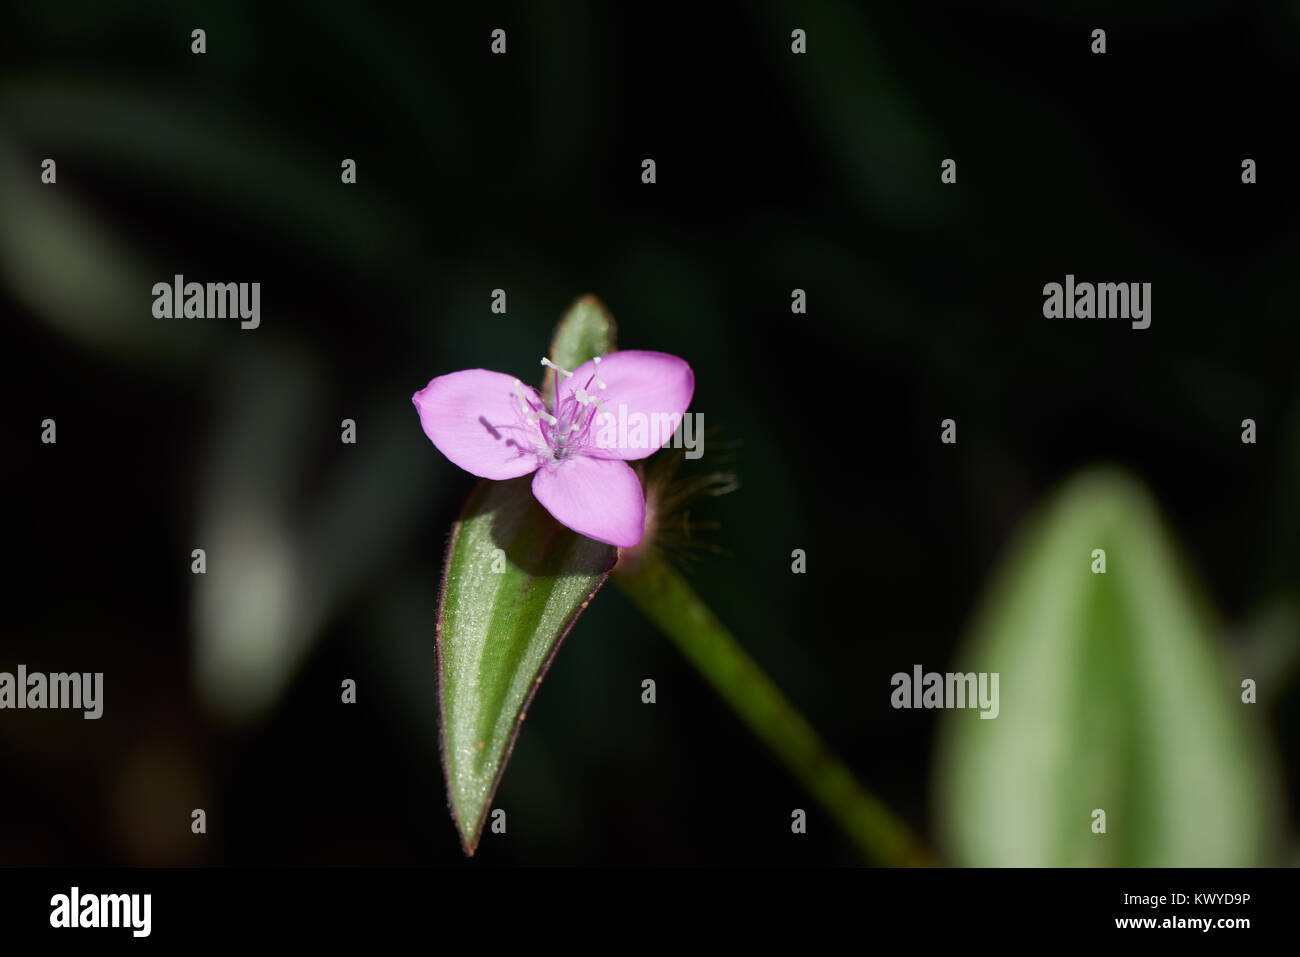 Flower of Tradescantia zebrina, also knwon as Zebrina pendula, inchplant or wandering jew. Stock Photo